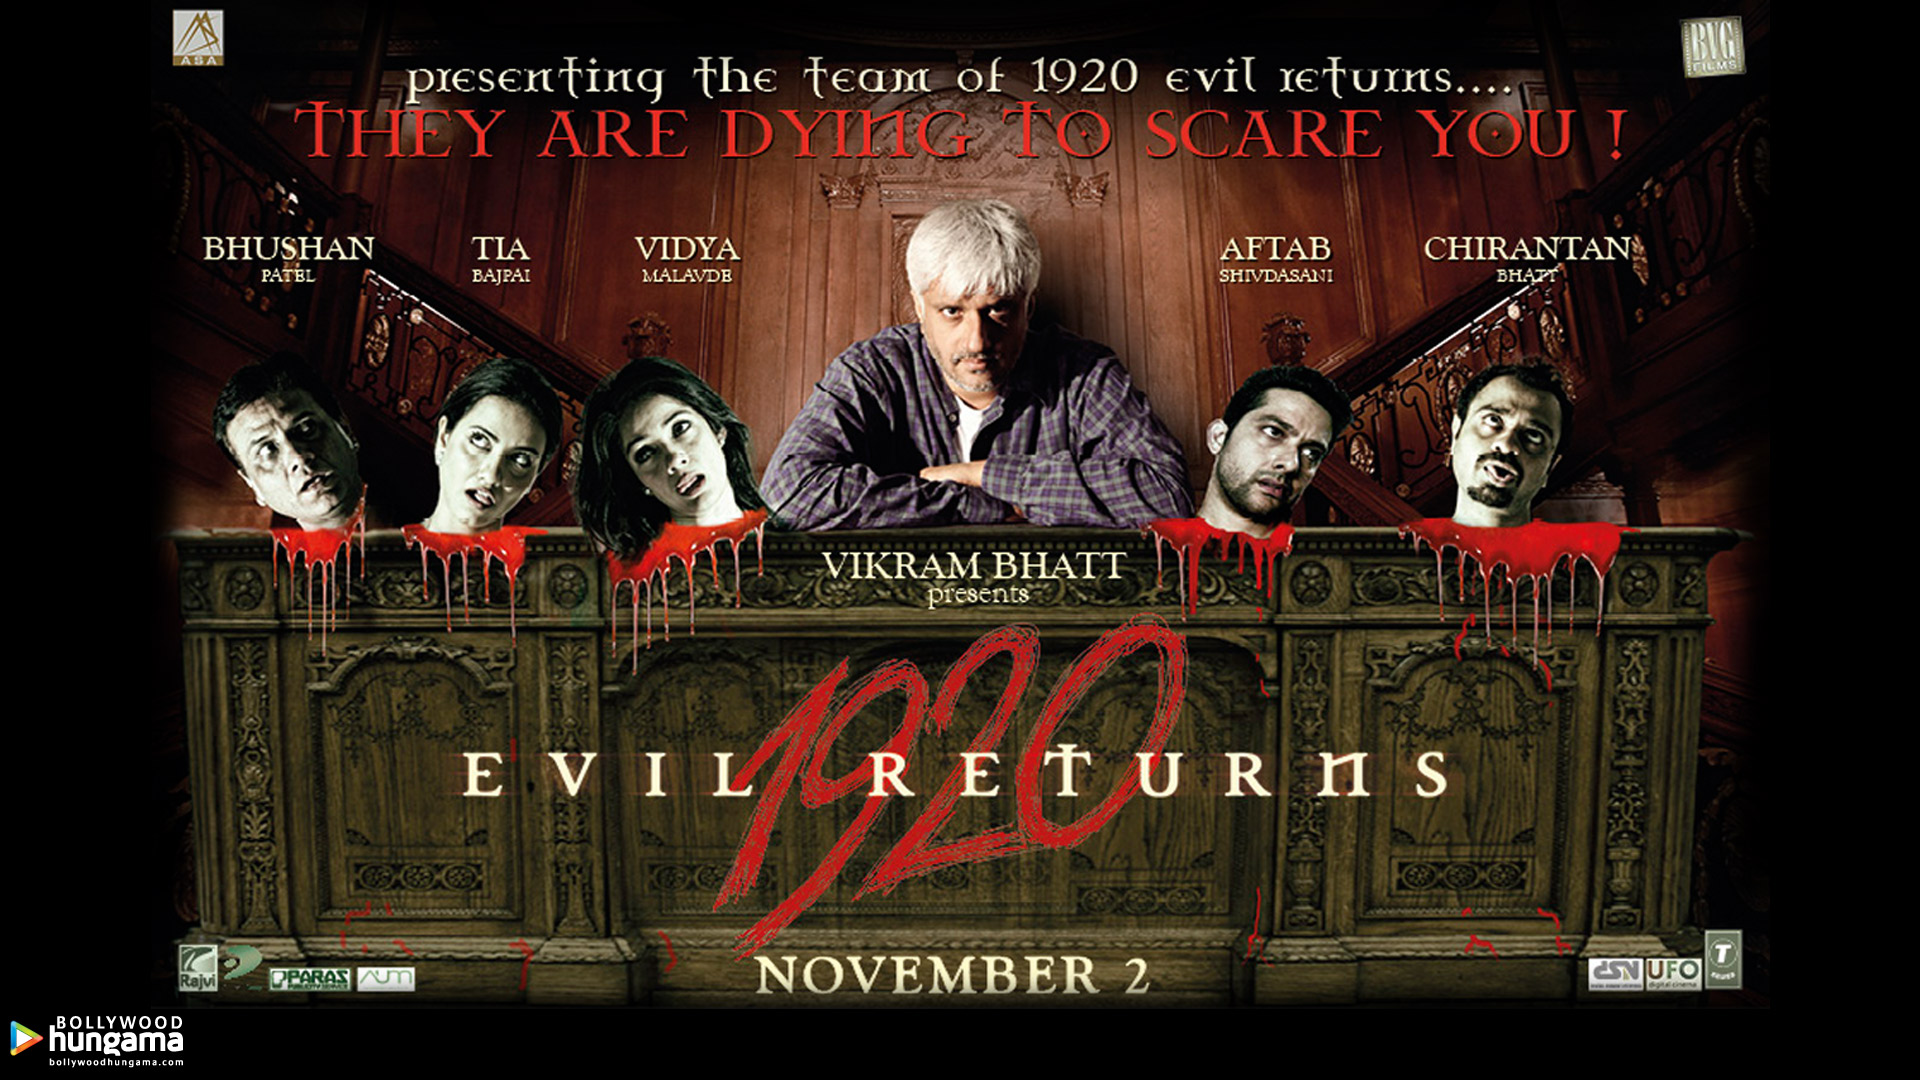 1920 evil returns full movie download free in hd